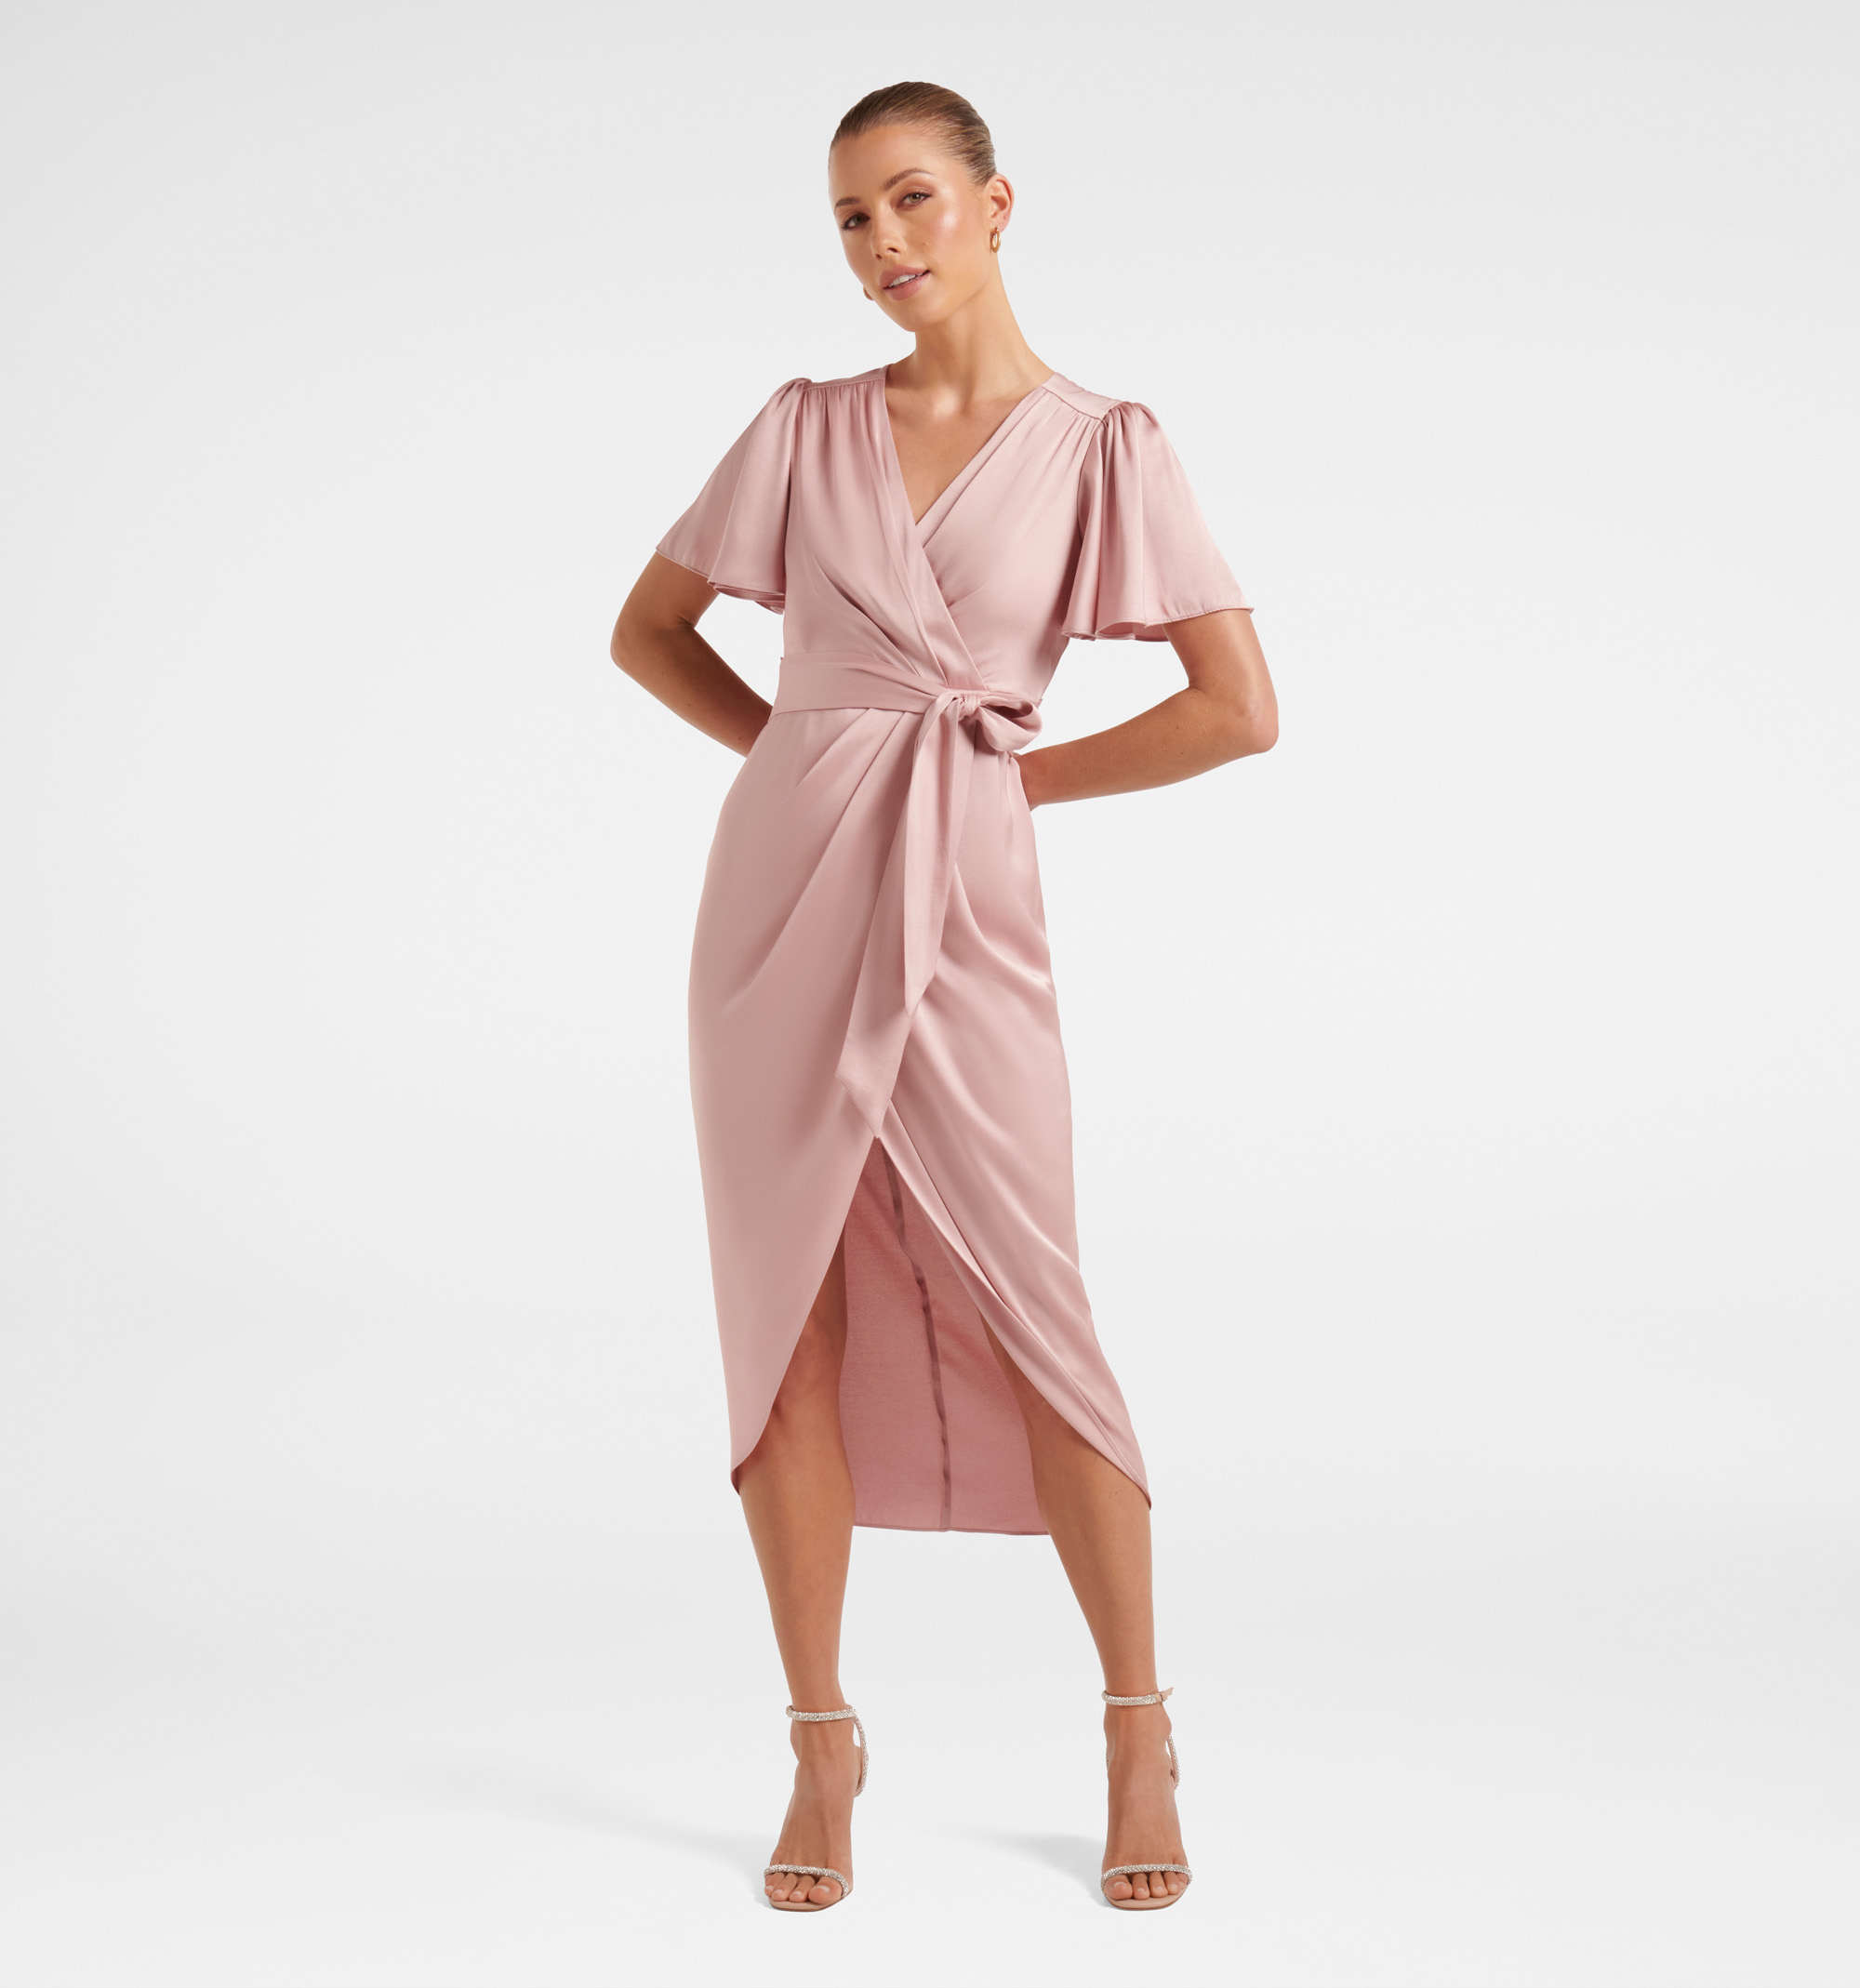 SHEIN Belle Ruched Asymmetrical Hem Solid Dress | SHEIN IN